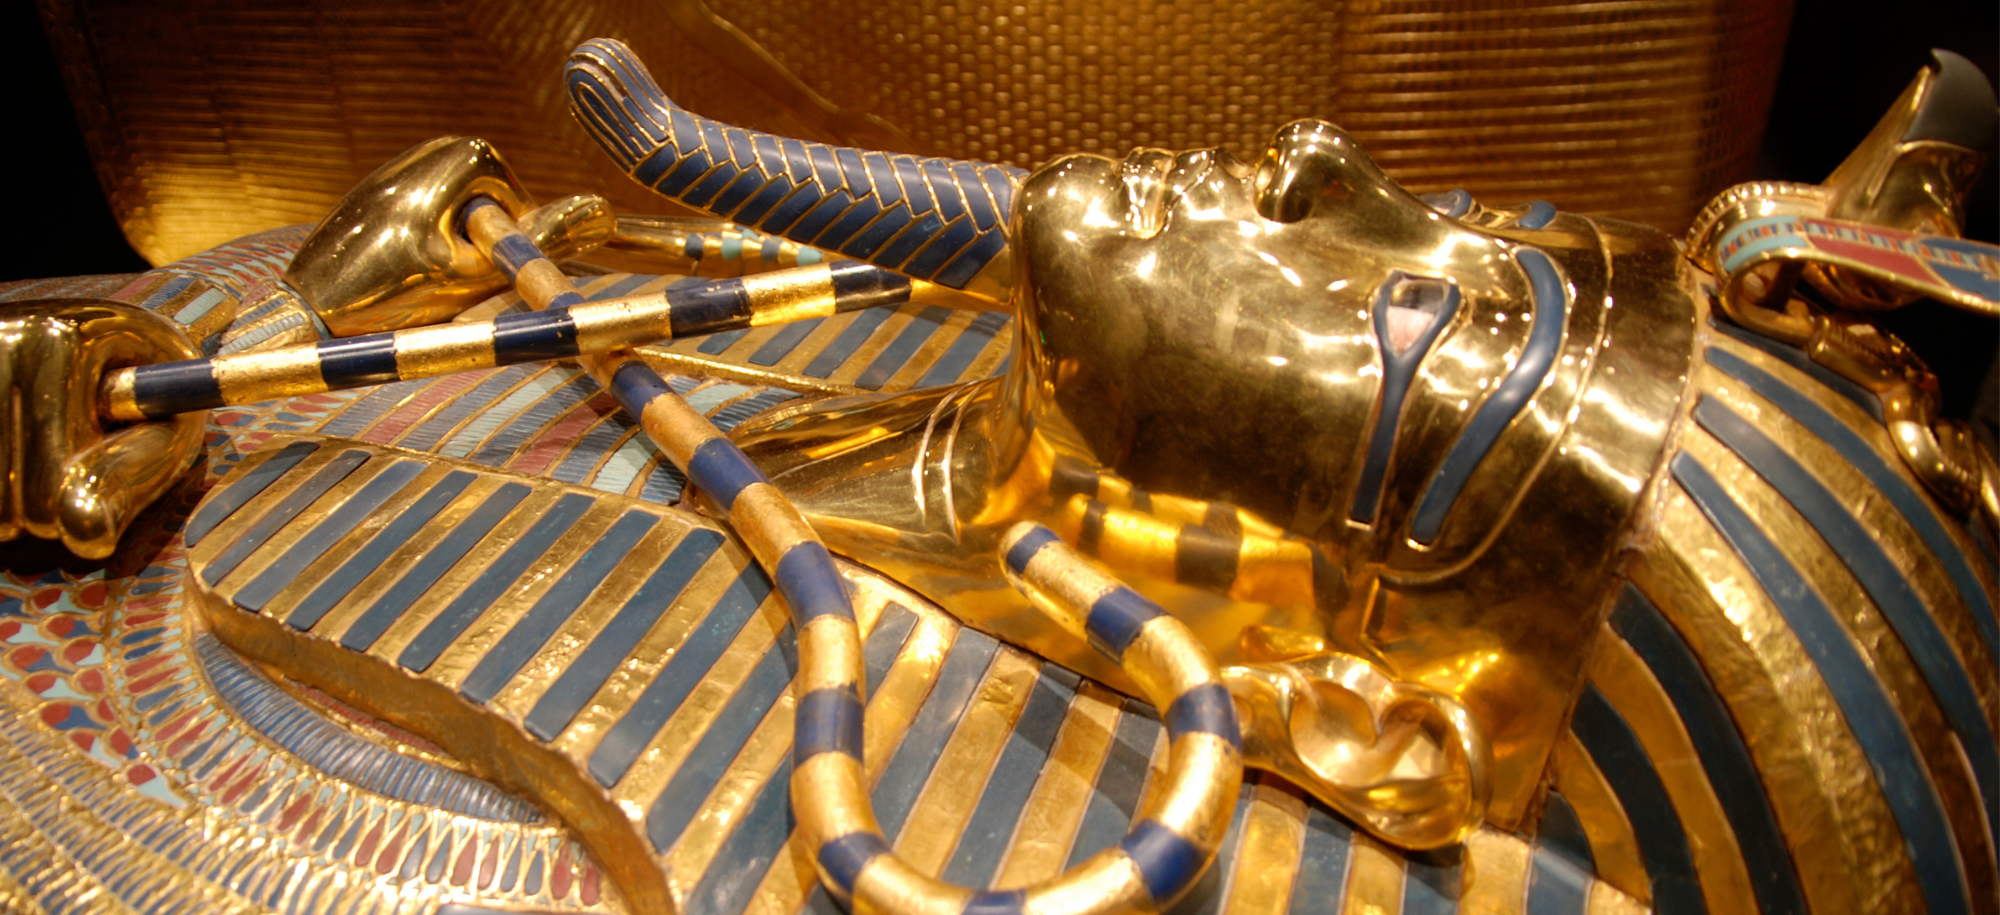 Image of Tutankhamun